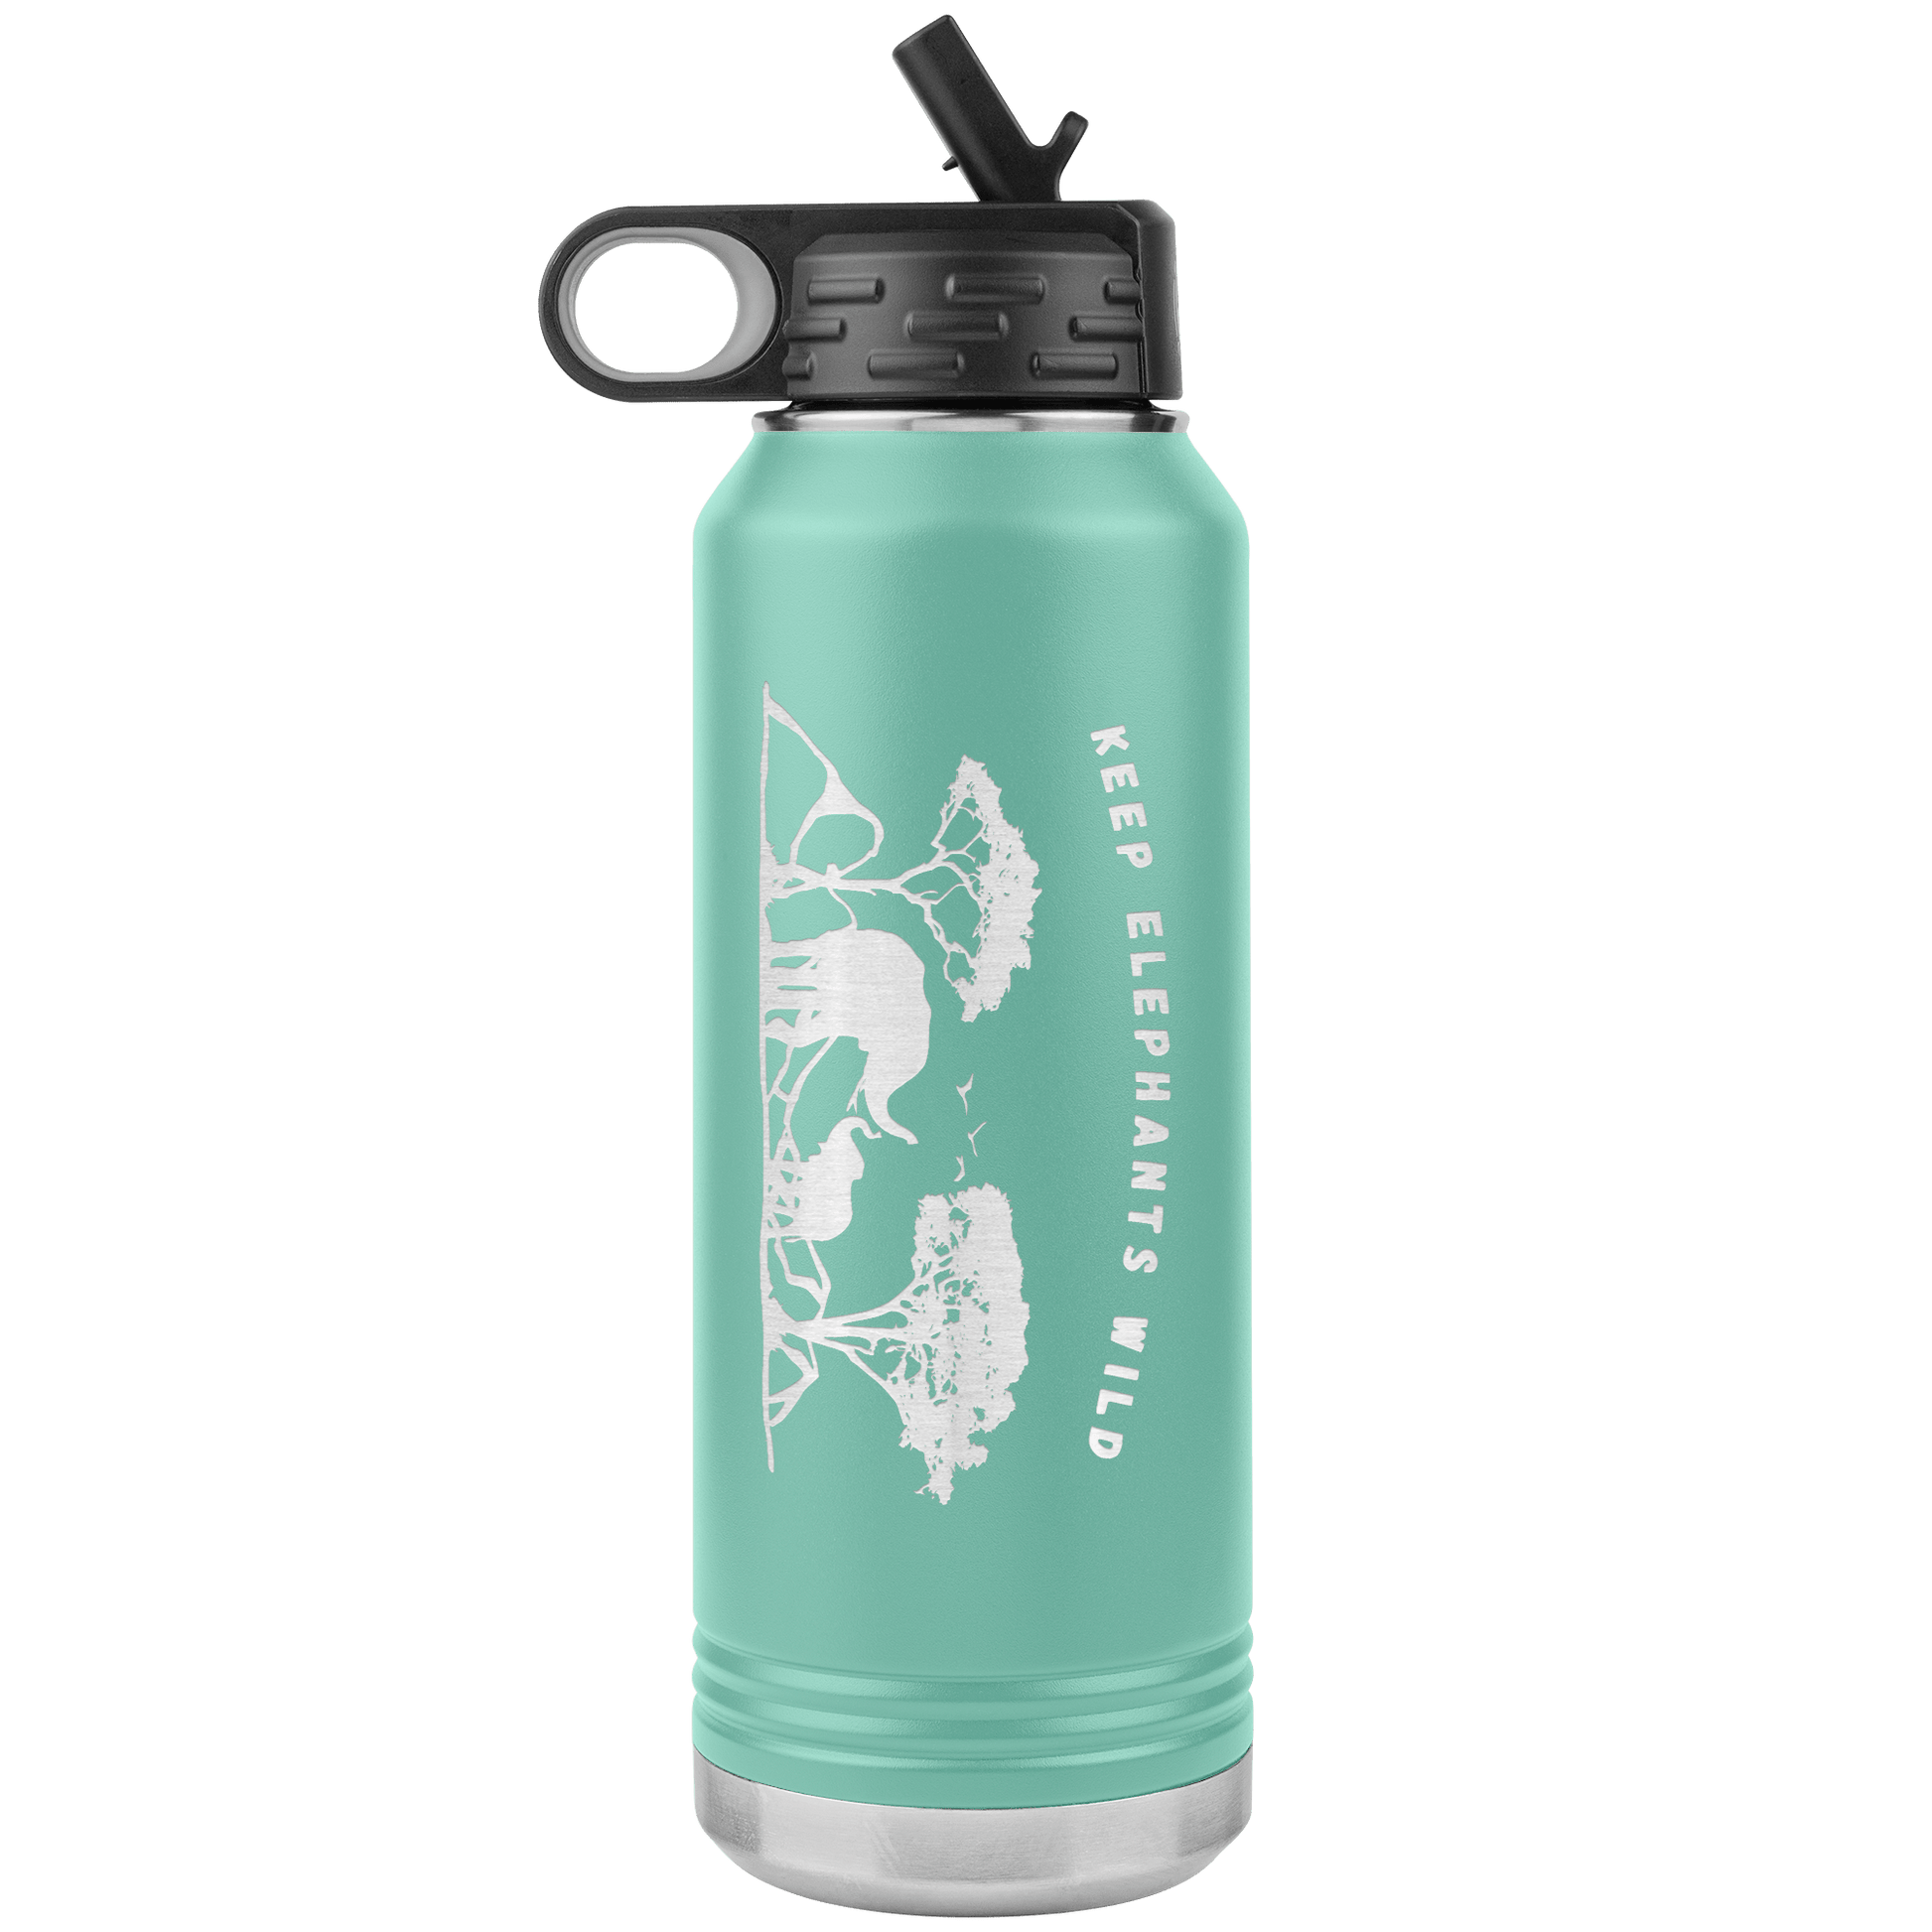 Keep Elephants Wild Stainless Steel Water Bottle - 32 oz. Tumbler Tumblers Teal